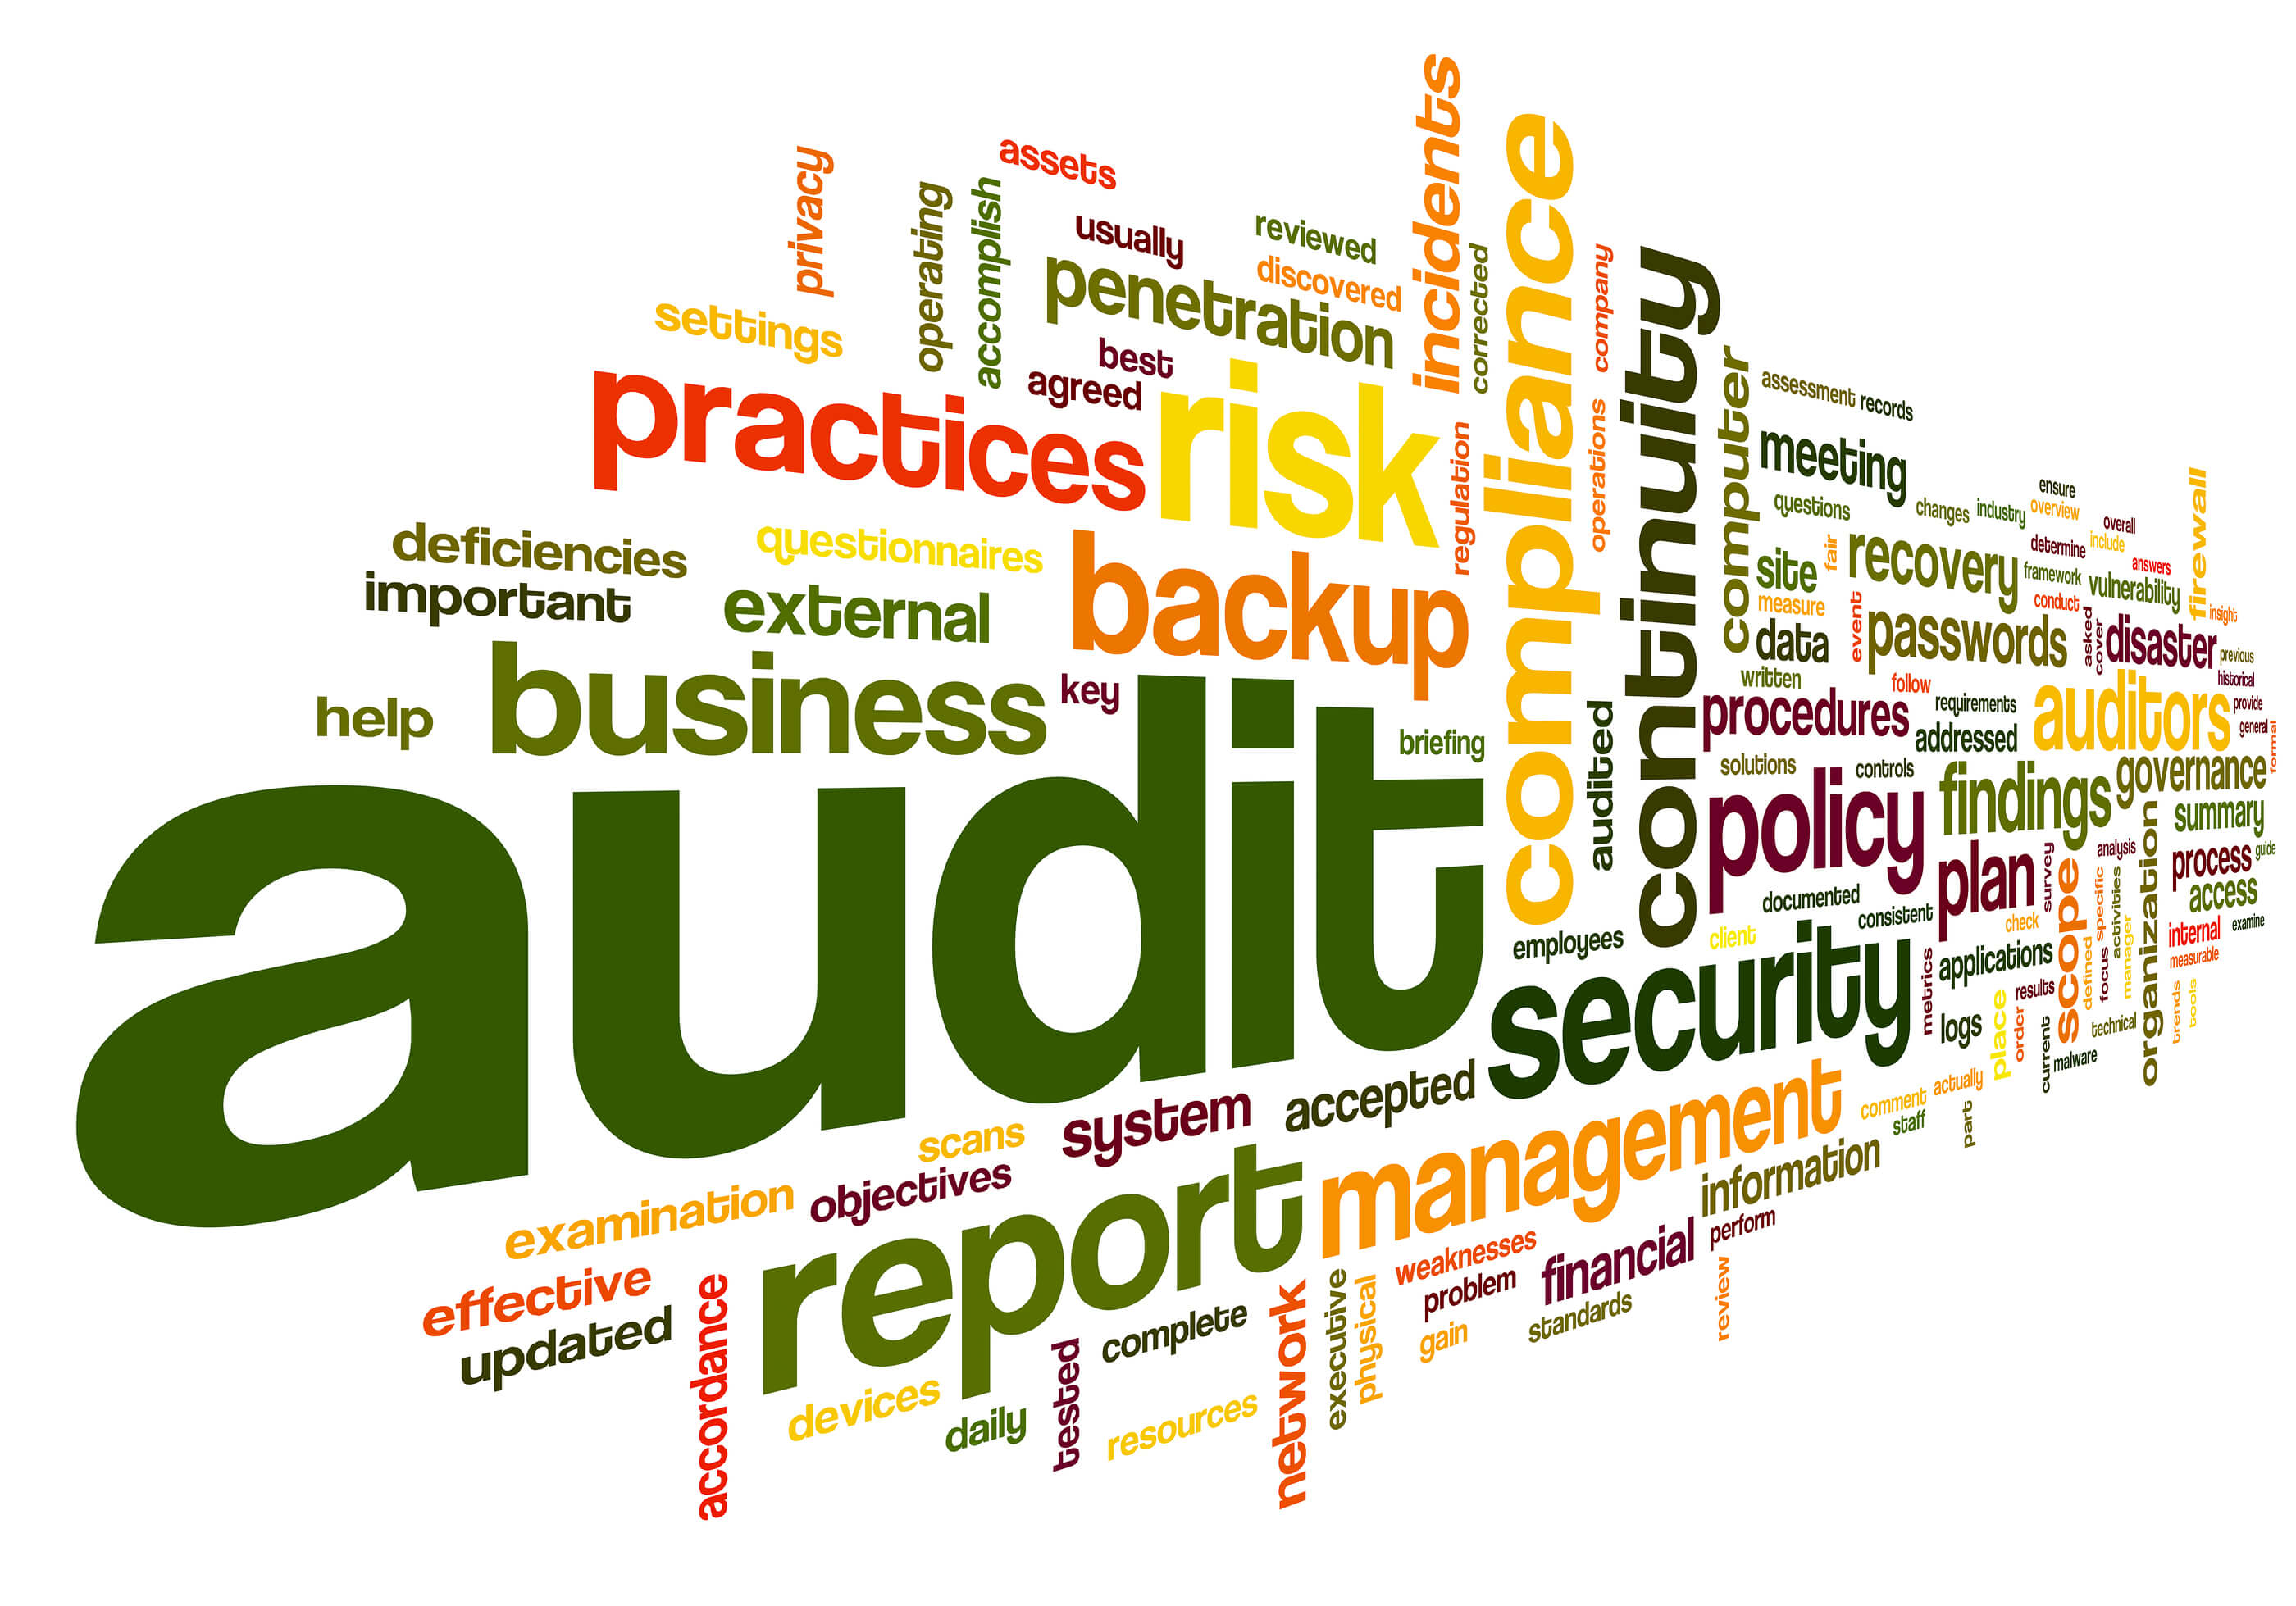 Information technology audit